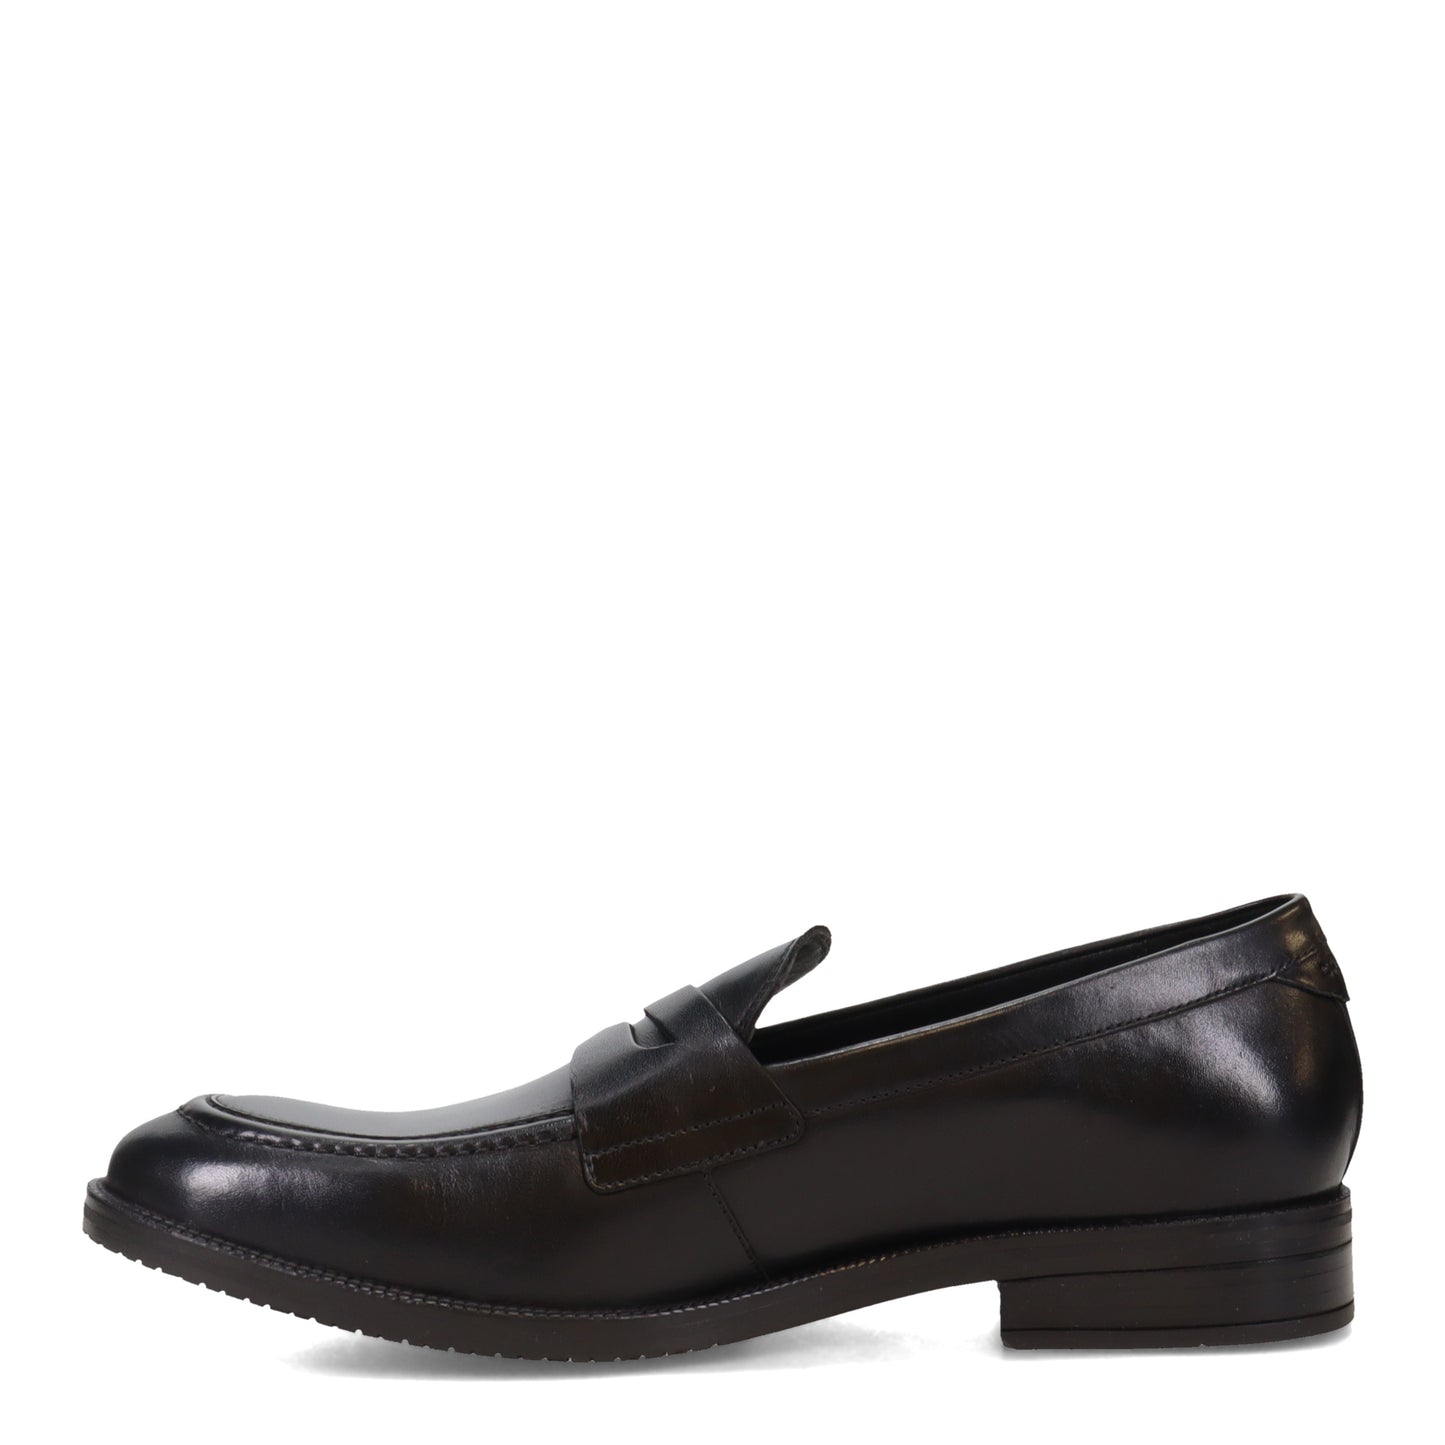 Peltz Shoes  Men's Cole Haan American Classics Penny Loafer BLACK C35103